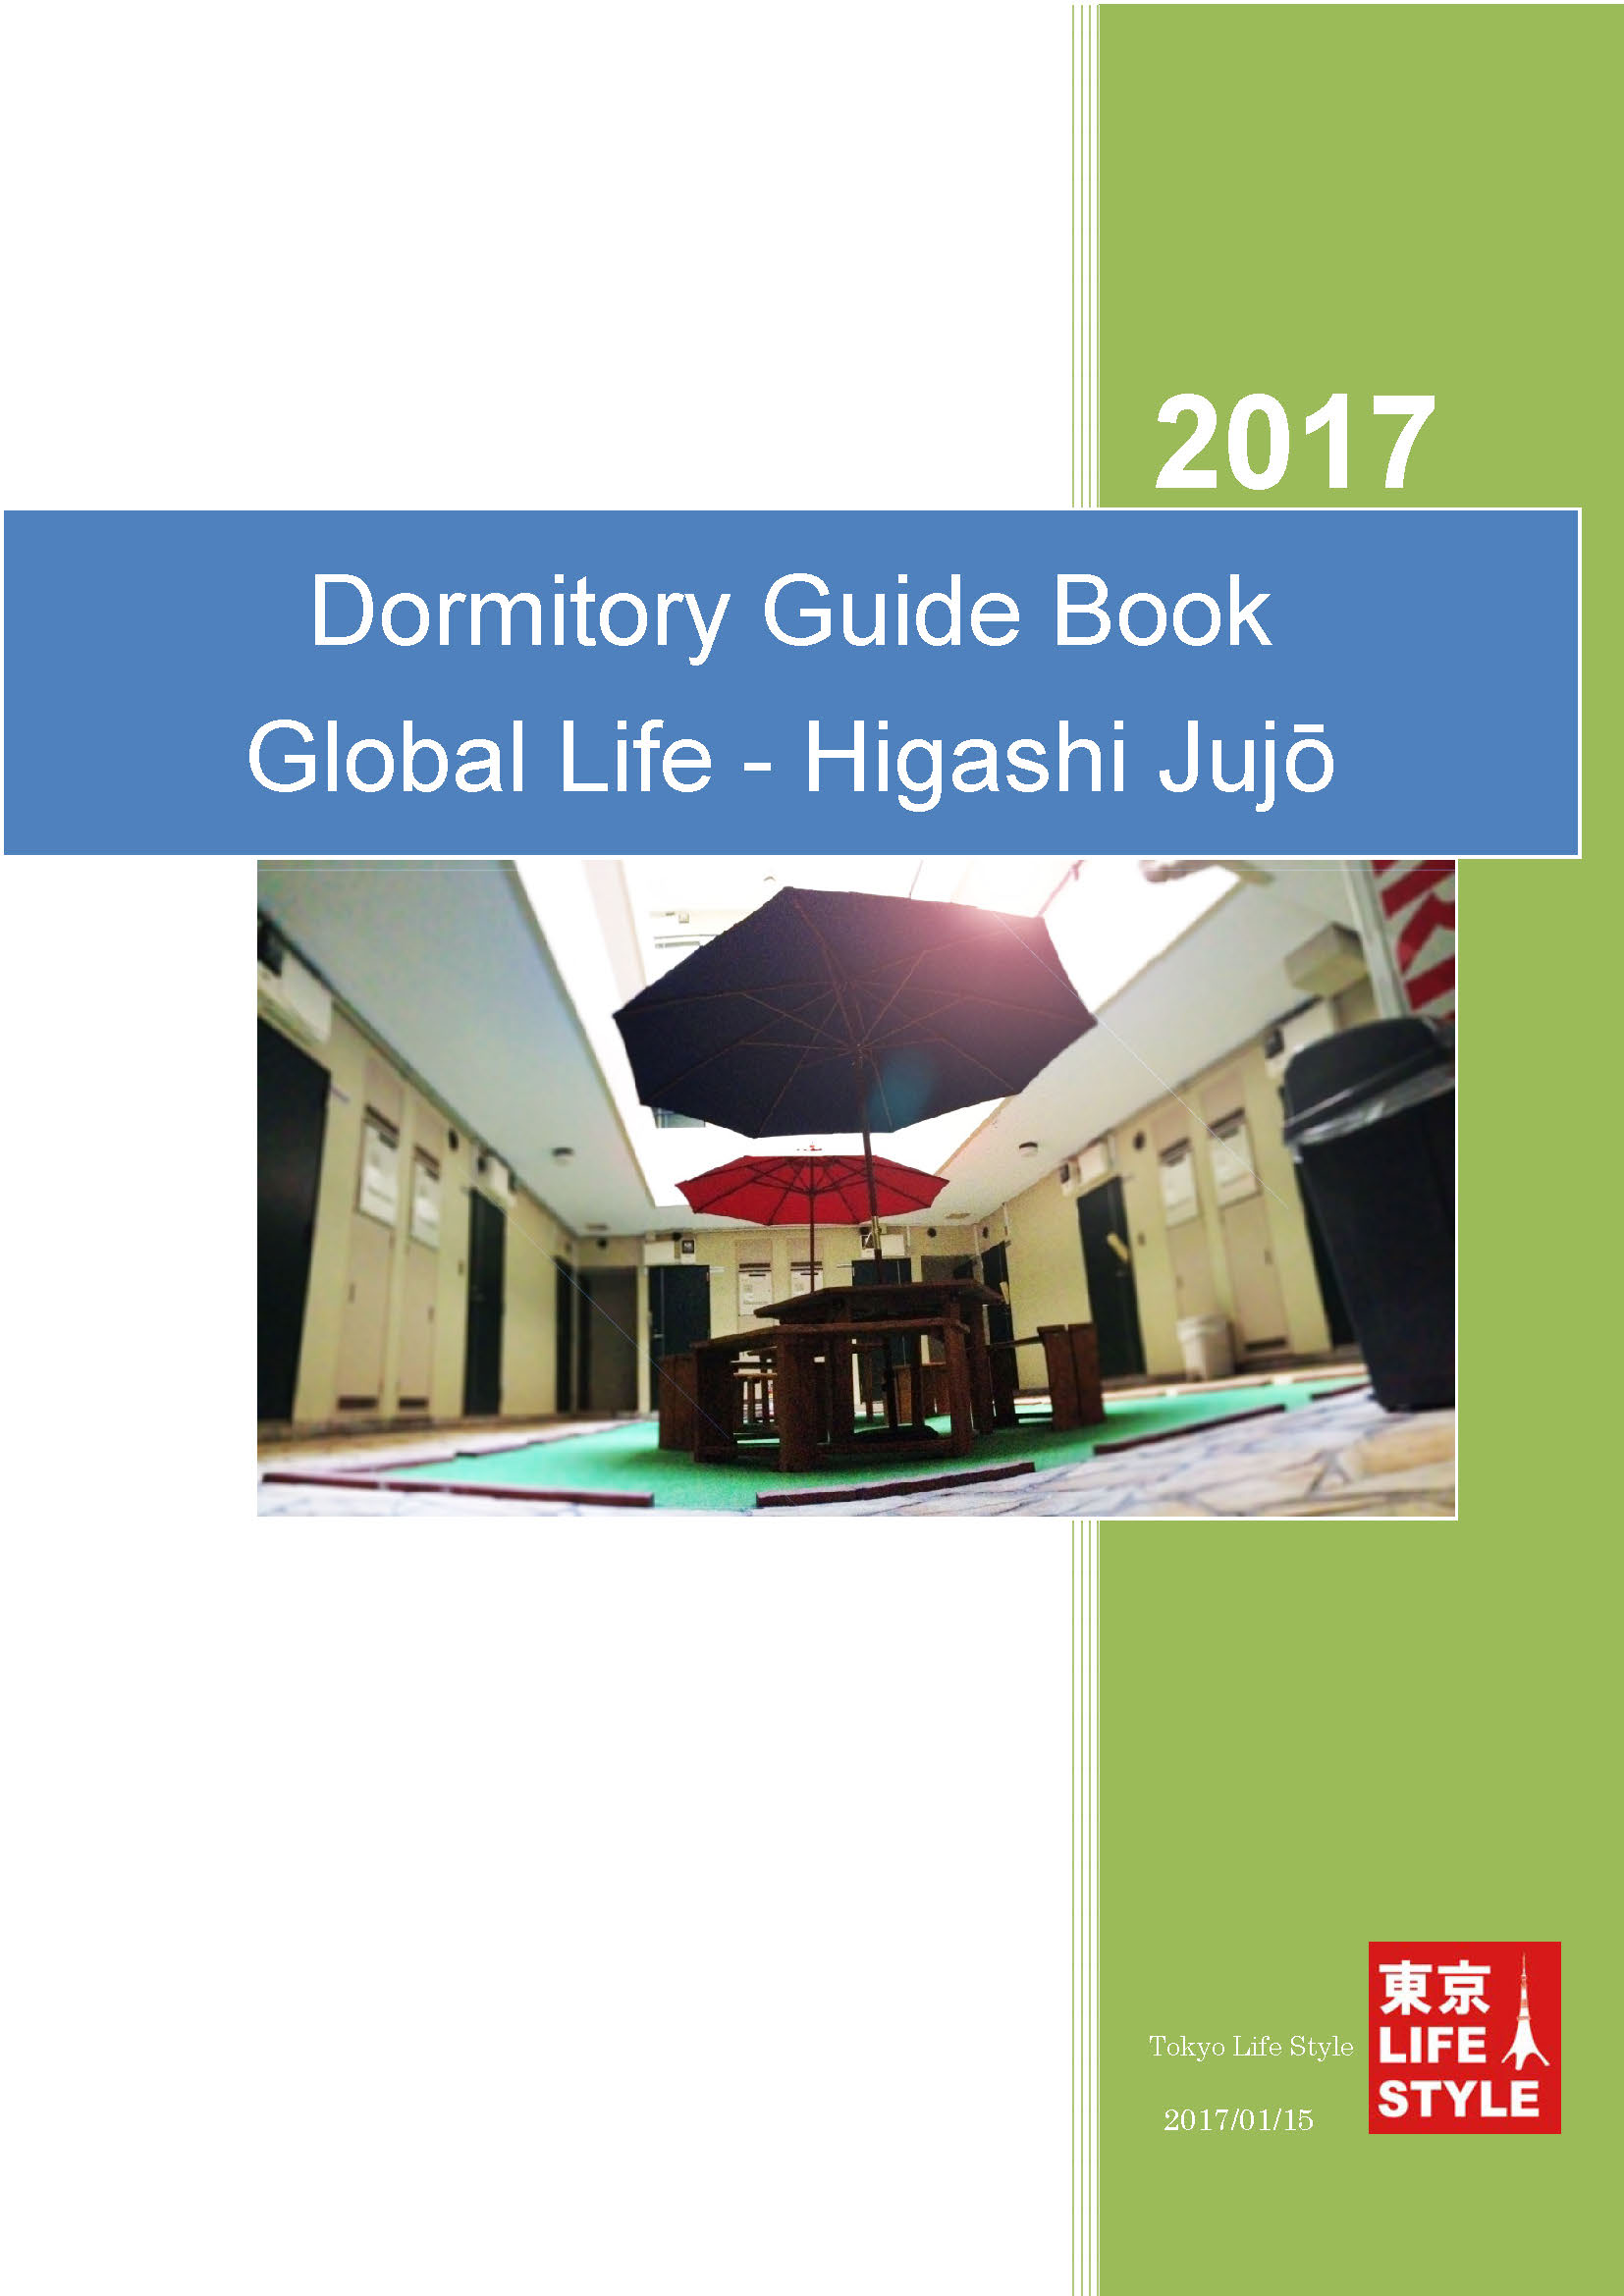 TLS Global Life Higashijujo Dormitory Guidebook for short term stay ver.4 Eng_ページ_1.jpg